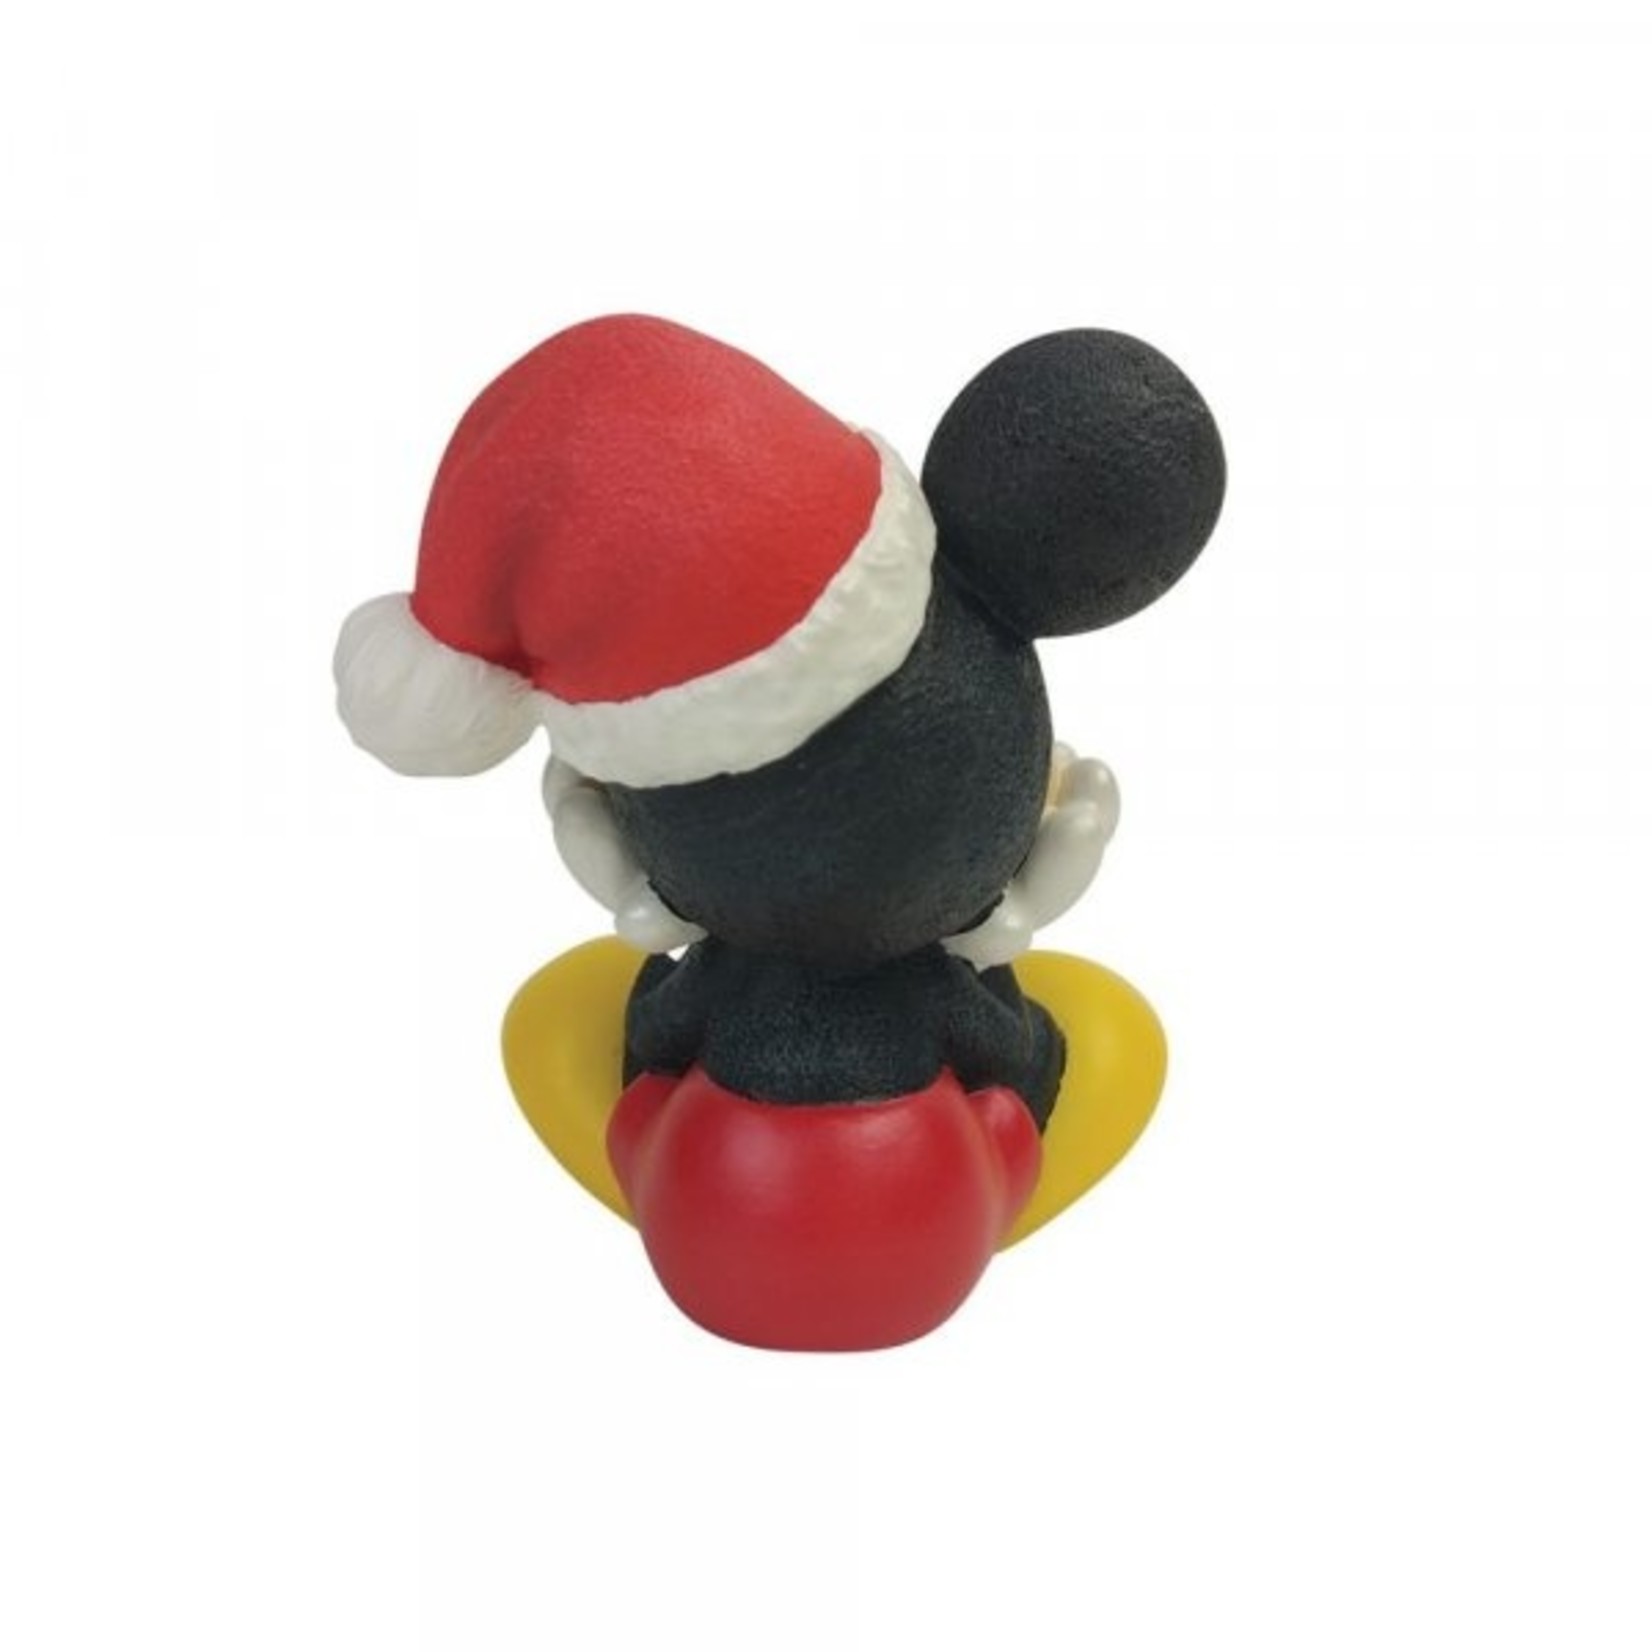 Disney Disney - Christmas Mickey Mouse Figurine